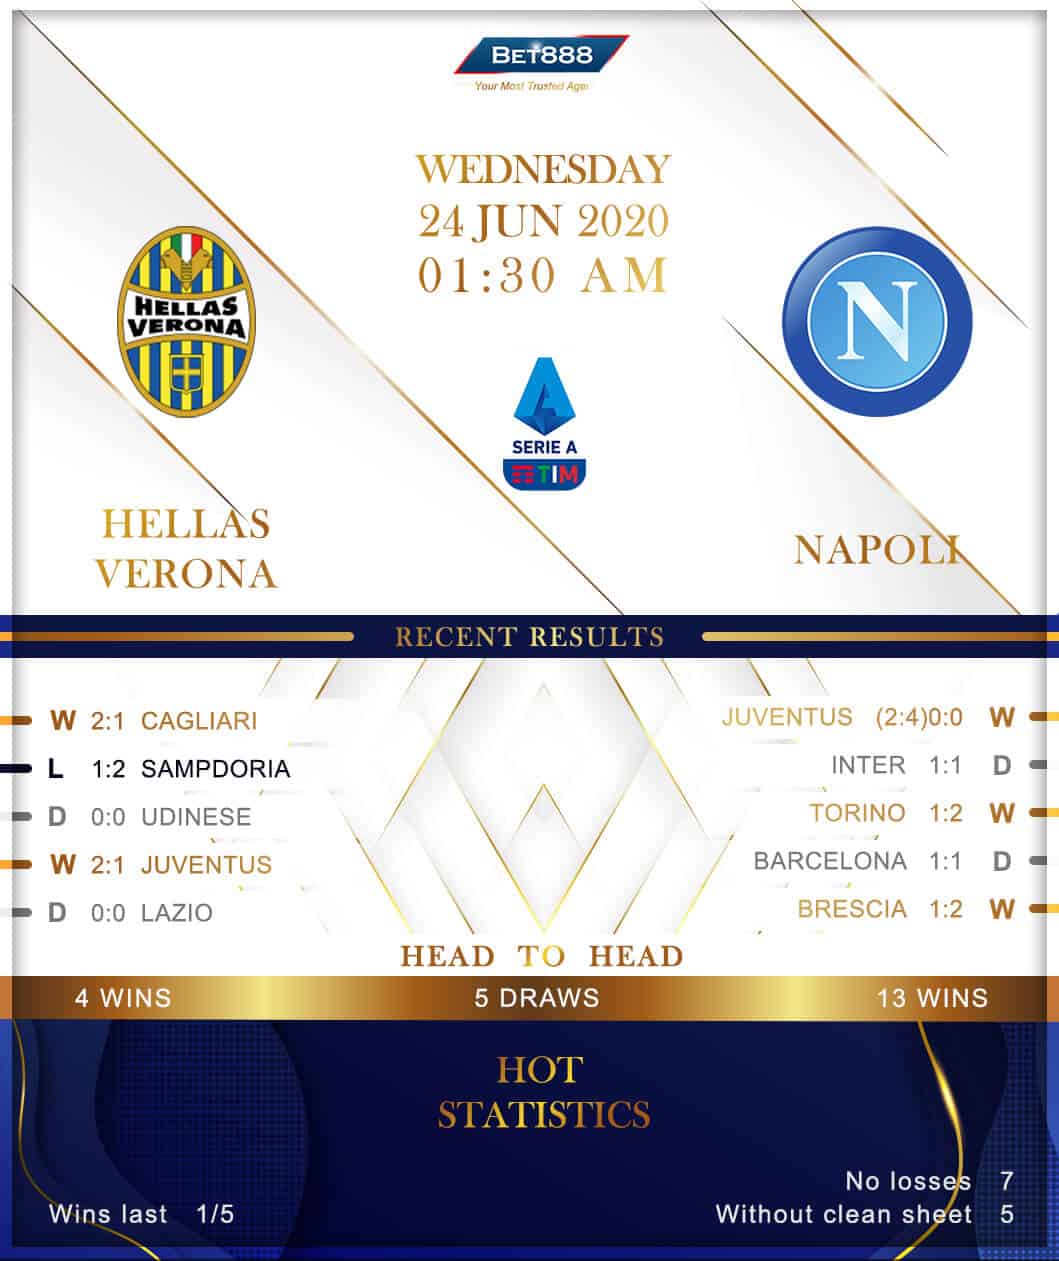 Hellas Verona vs Napoli 24/06/20